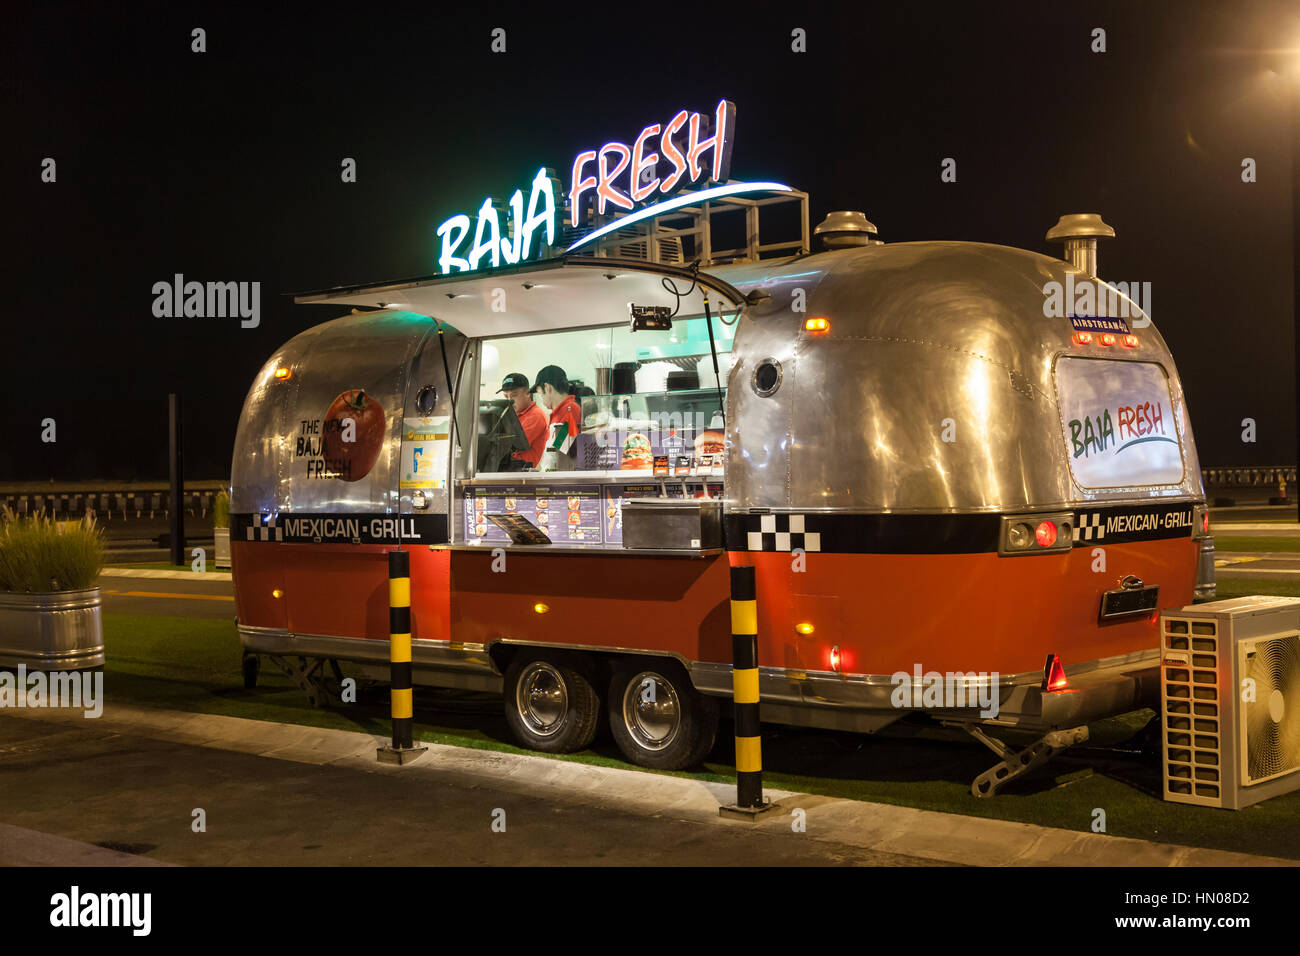 DUBAI, UAE - DEC 4, 2016: Airstream caravan food truck at the Last Exit food trucks park on the E11 highway between Abu Dhabi and Dubai Stock Photo